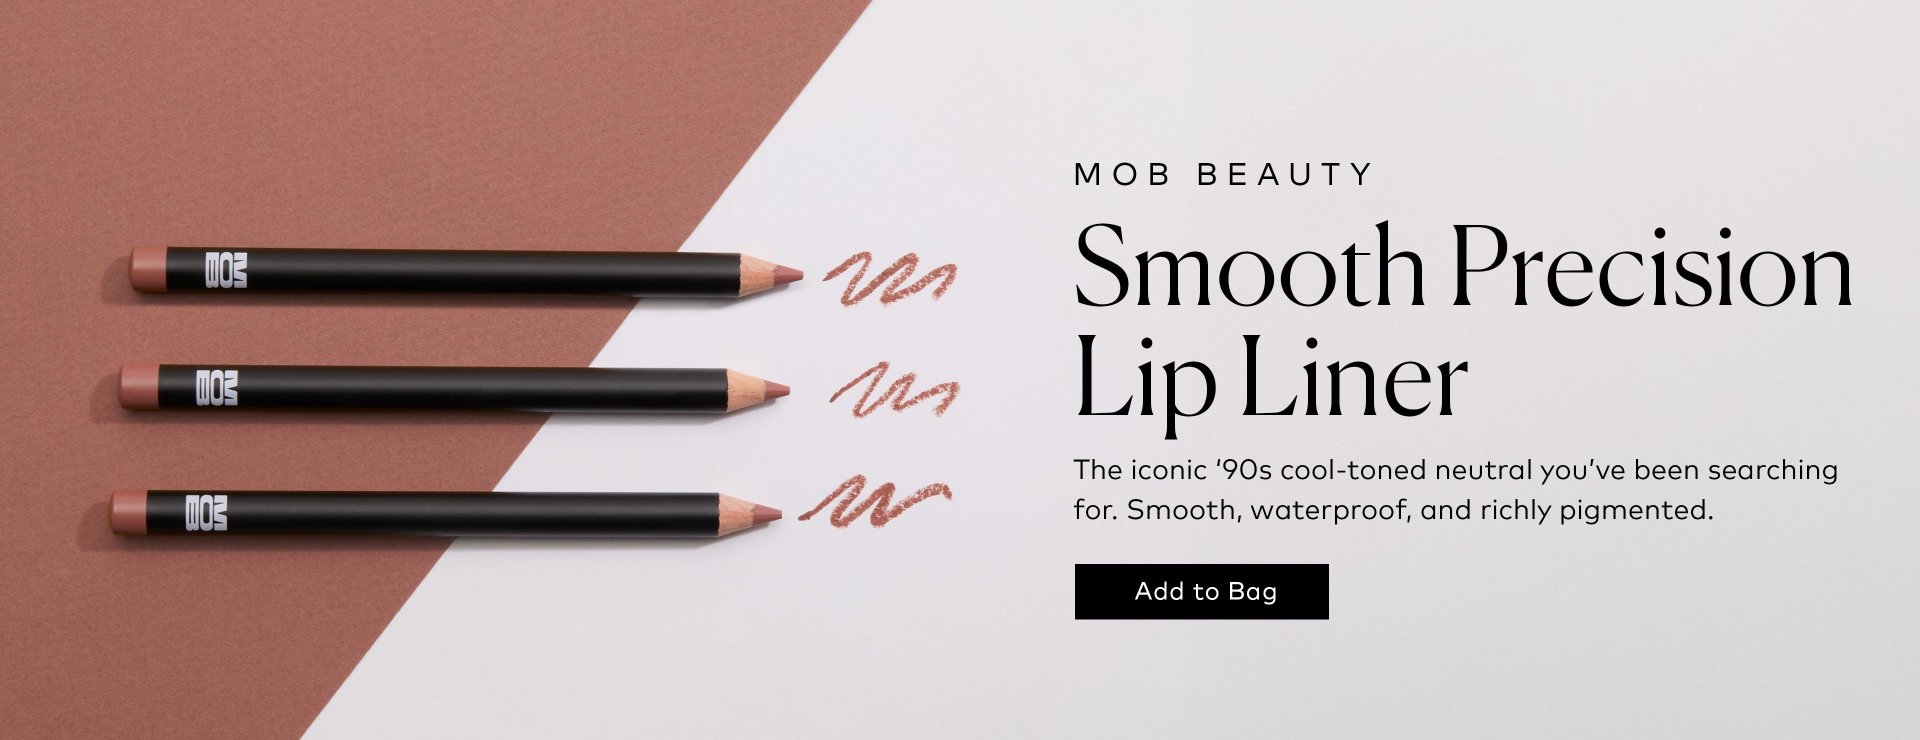 Shop the MOB Beauty Smooth Precision Lip Liner at Beautylish.com